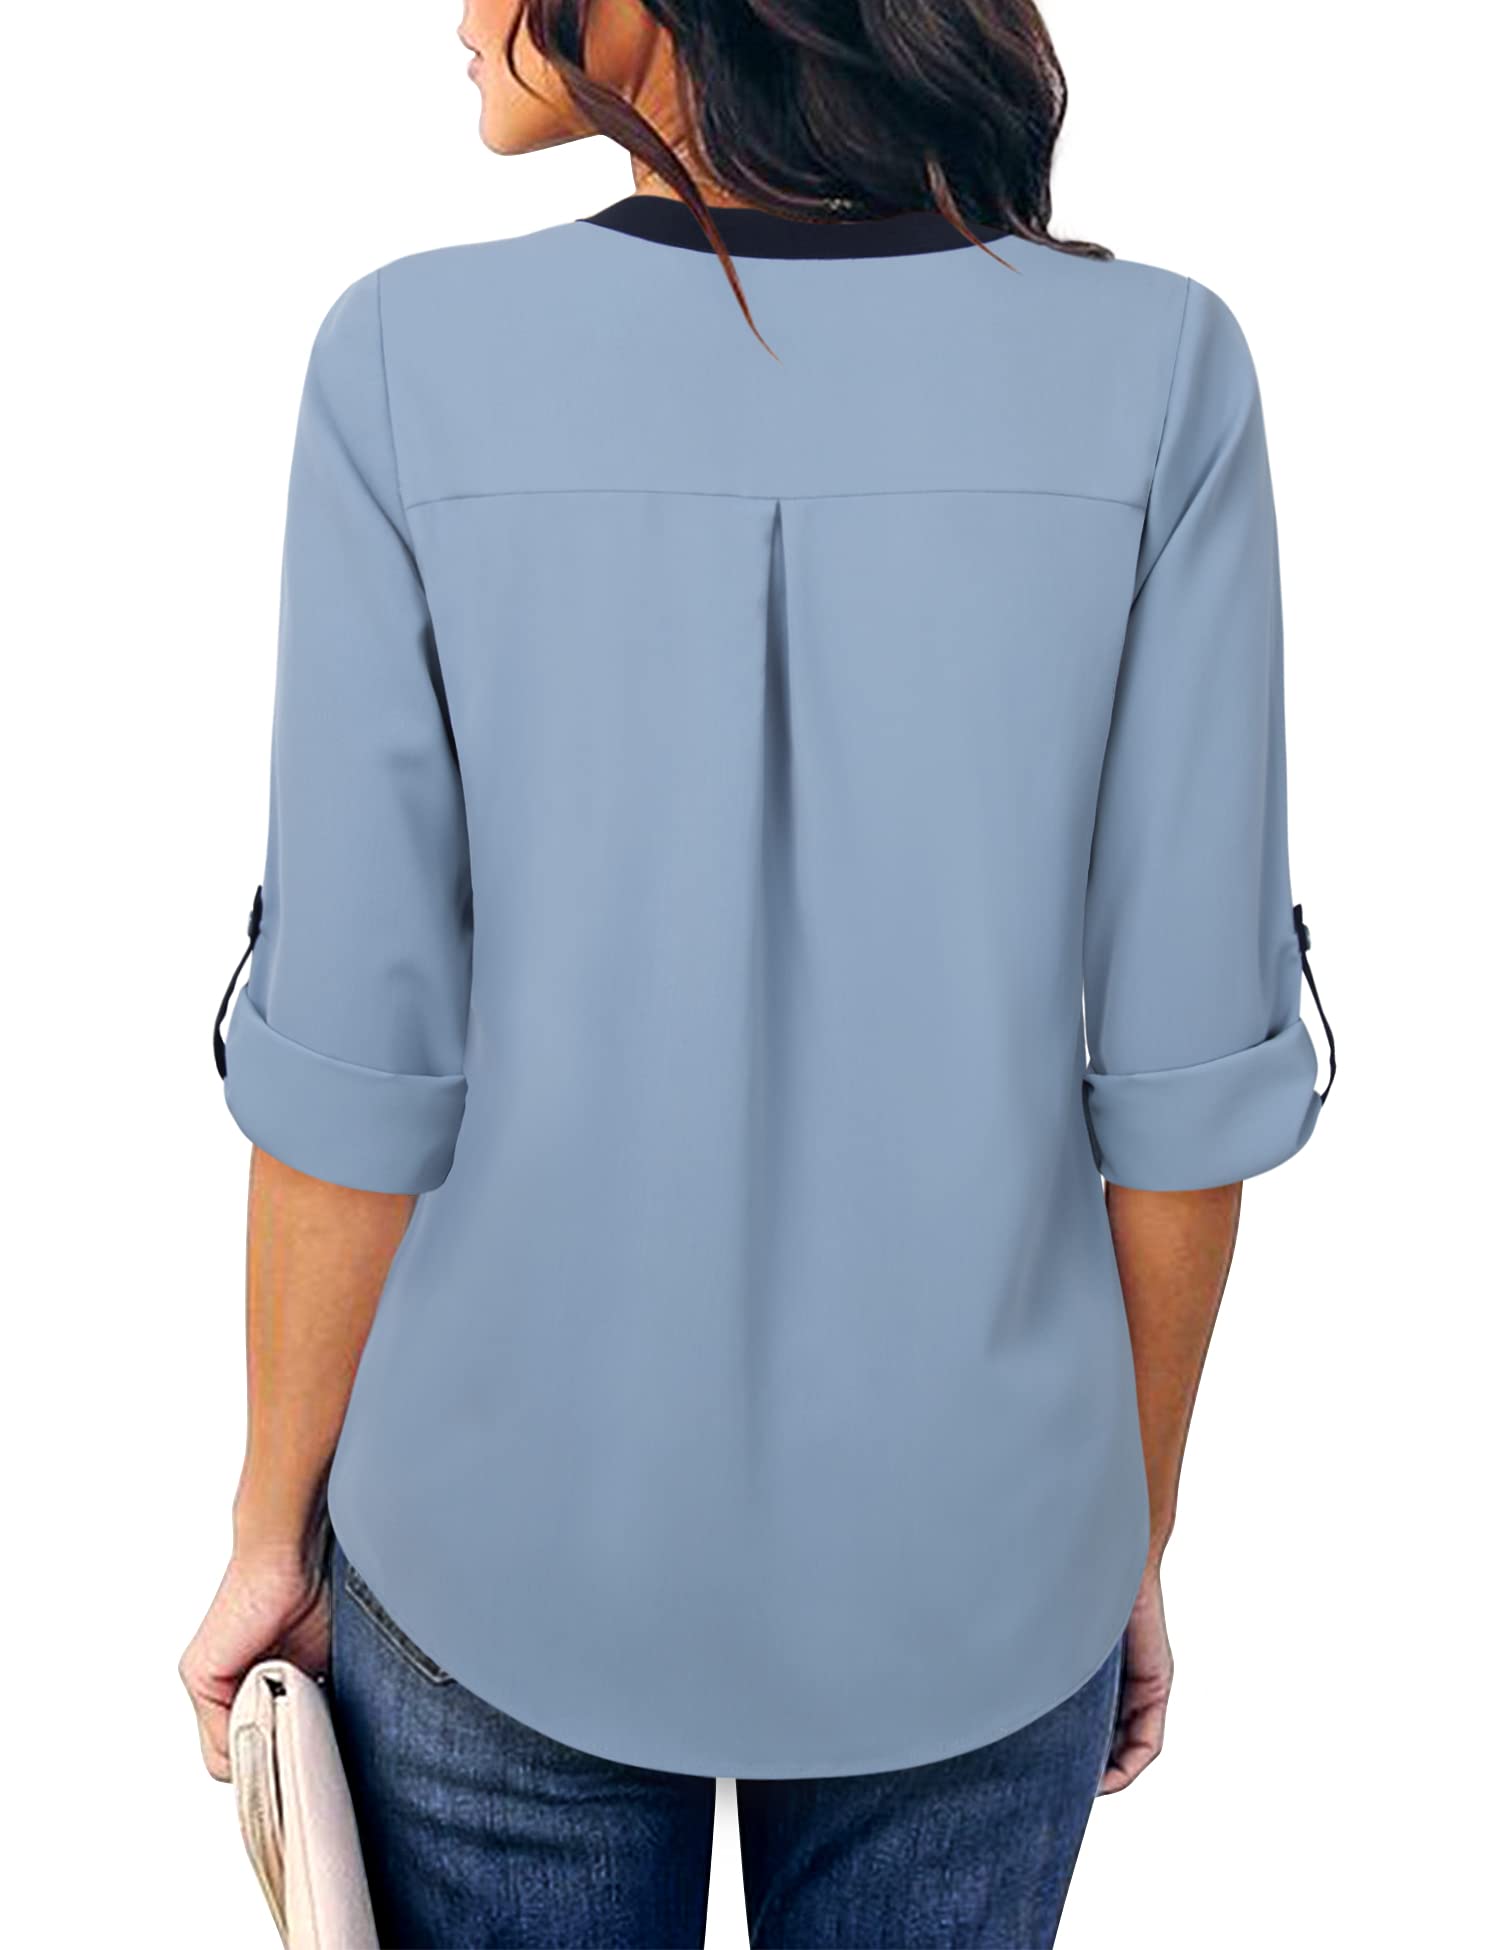 Gaharu Women's Casaul 3/4 Sleeve Shirts Tops V Neck Chiffon Blouses